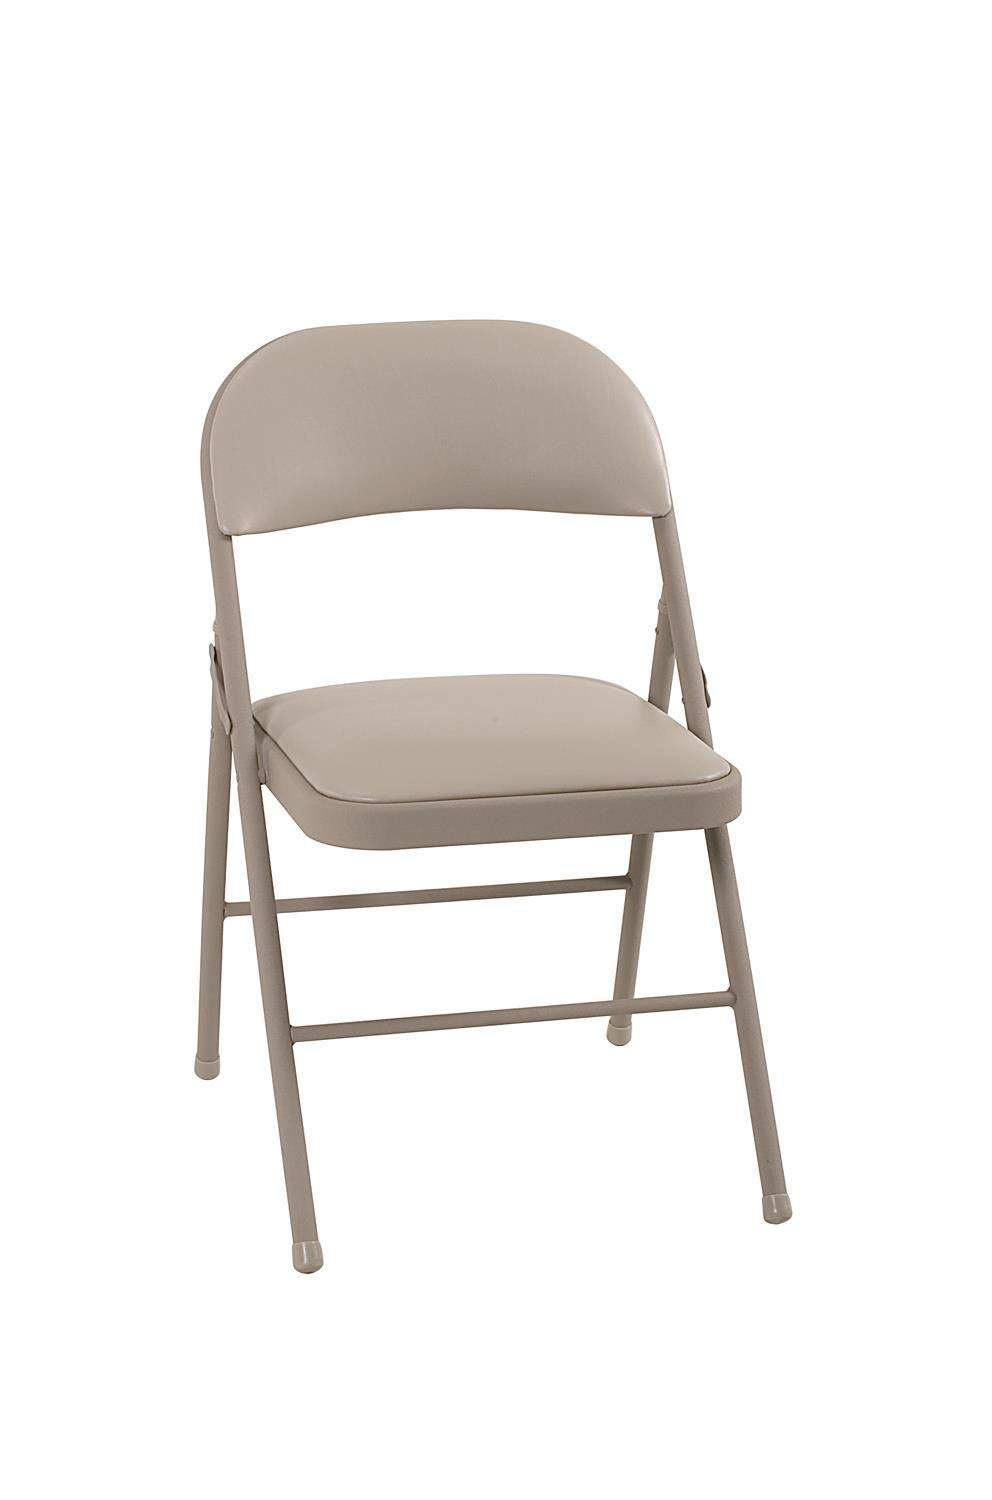 COSCO Folding Chairs